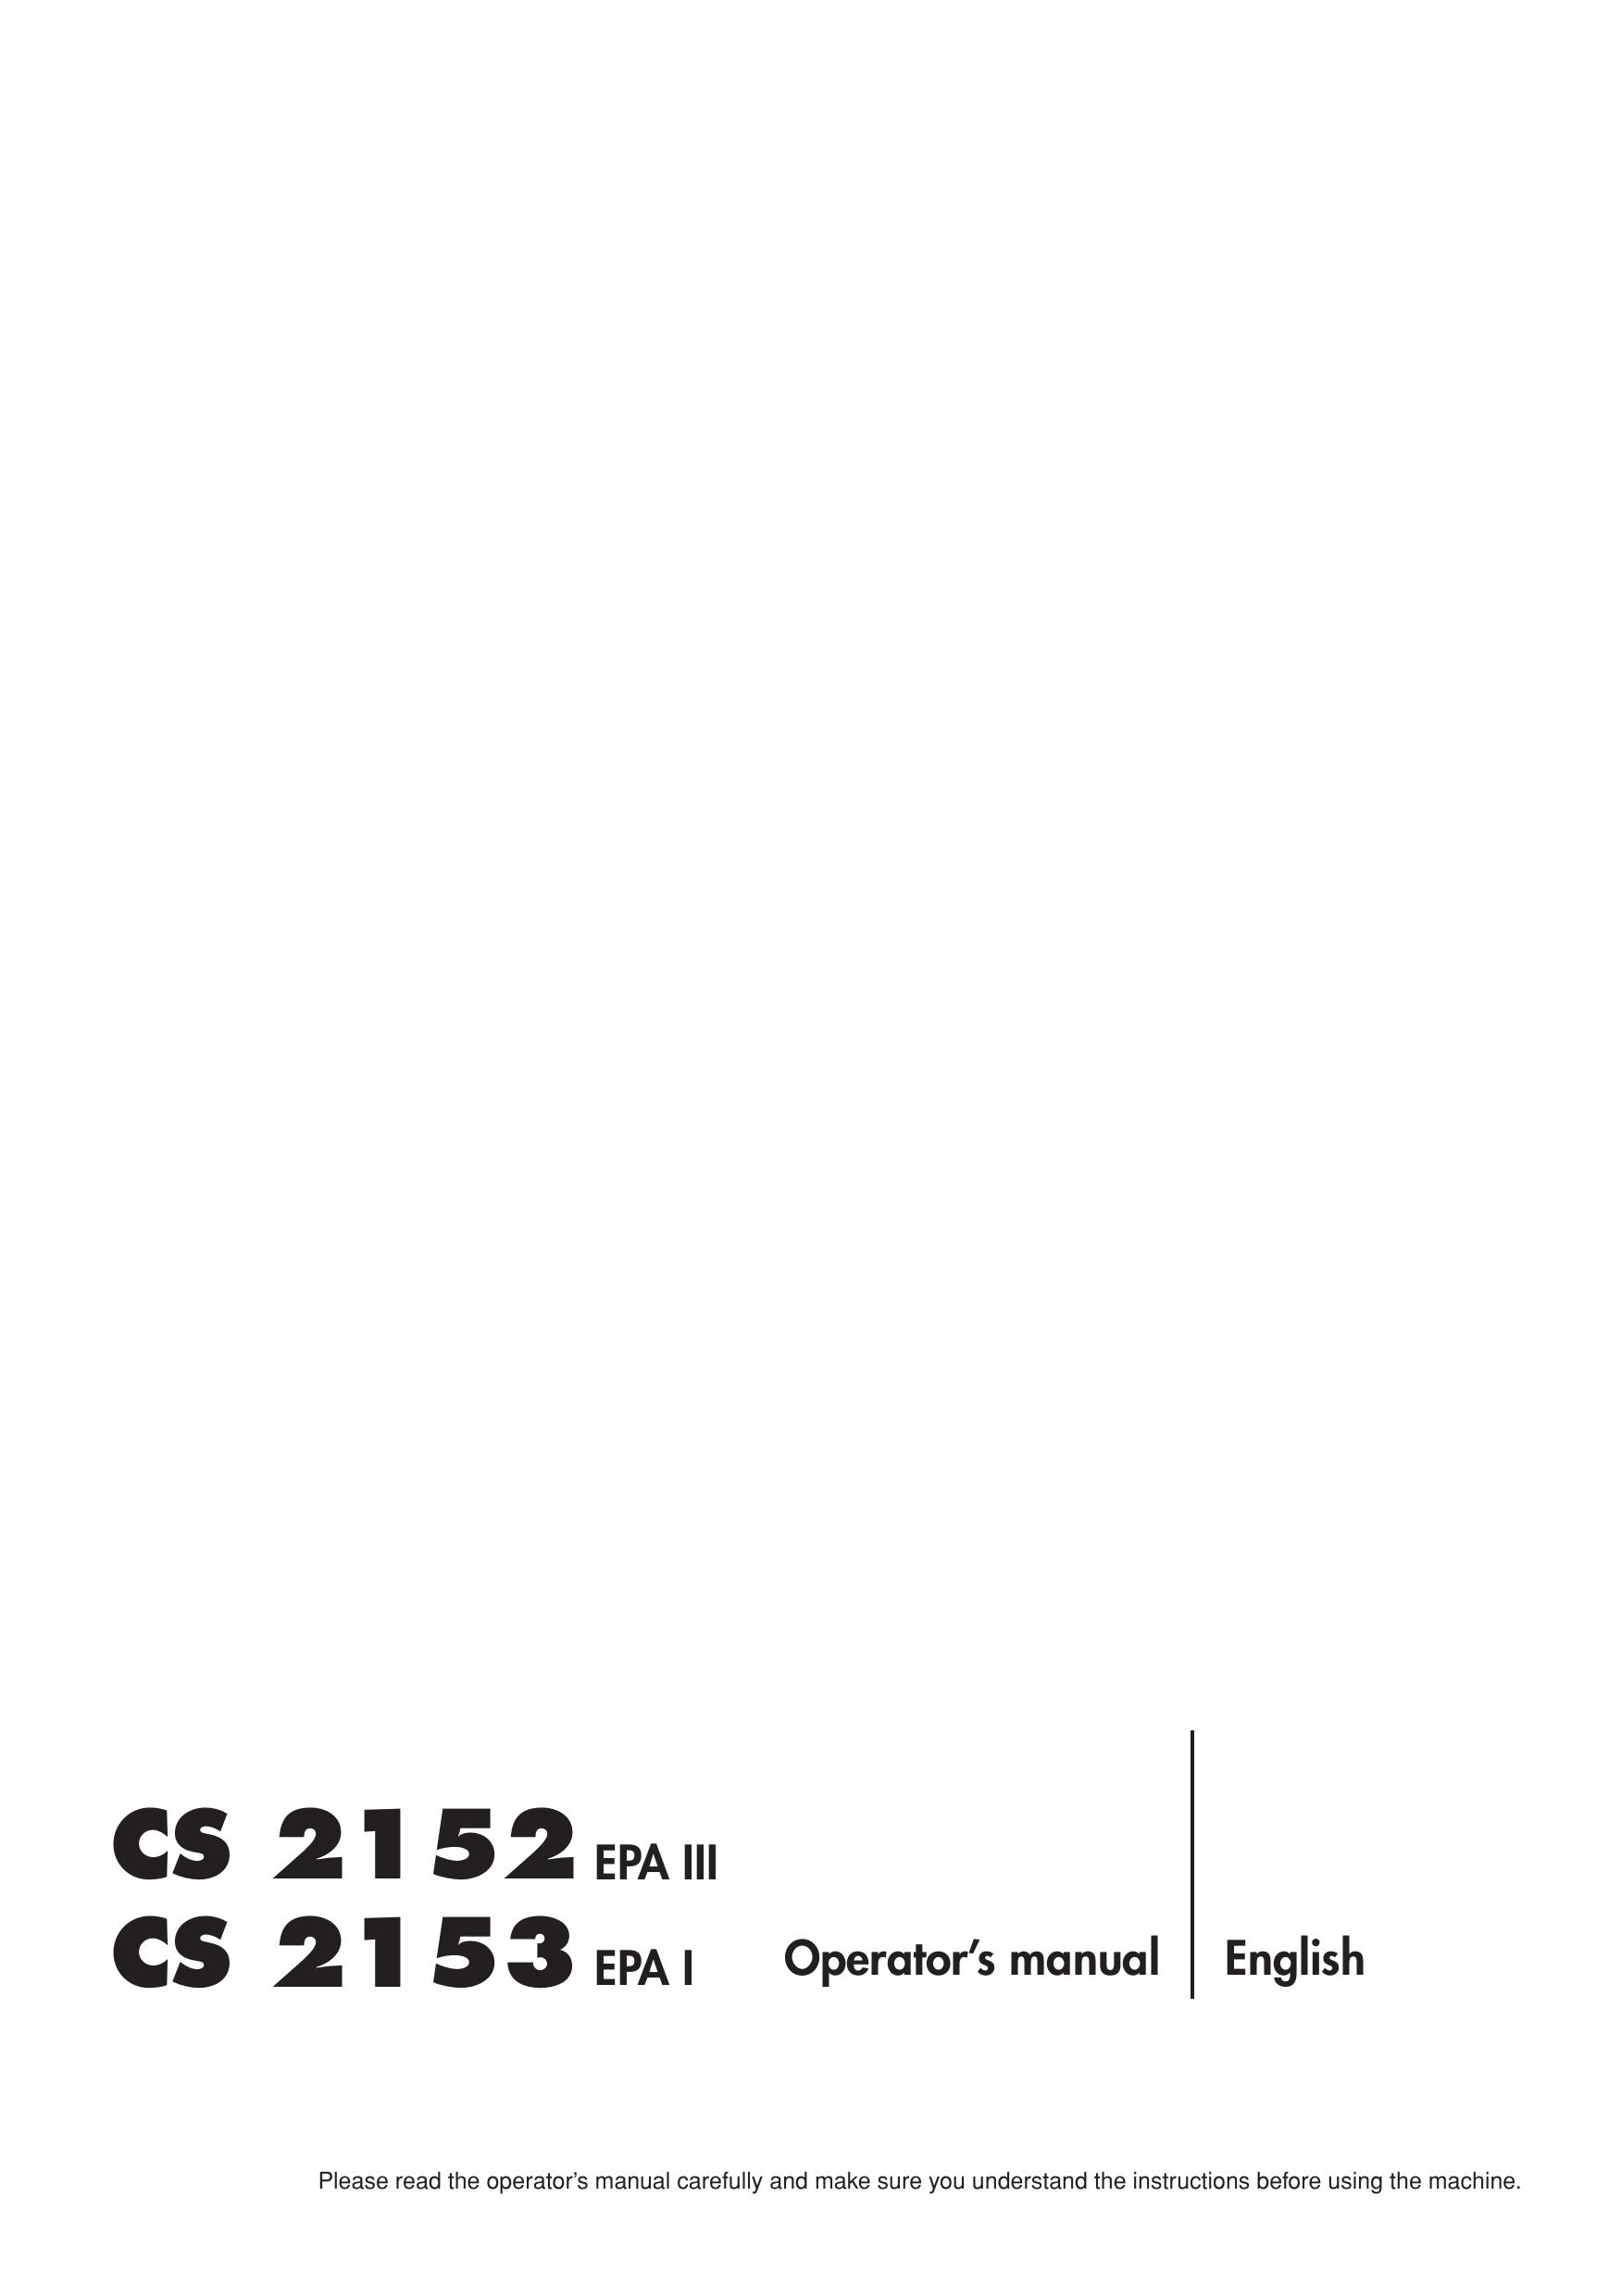 Jonsered CS 2152 EPA III Chainsaw User Manual